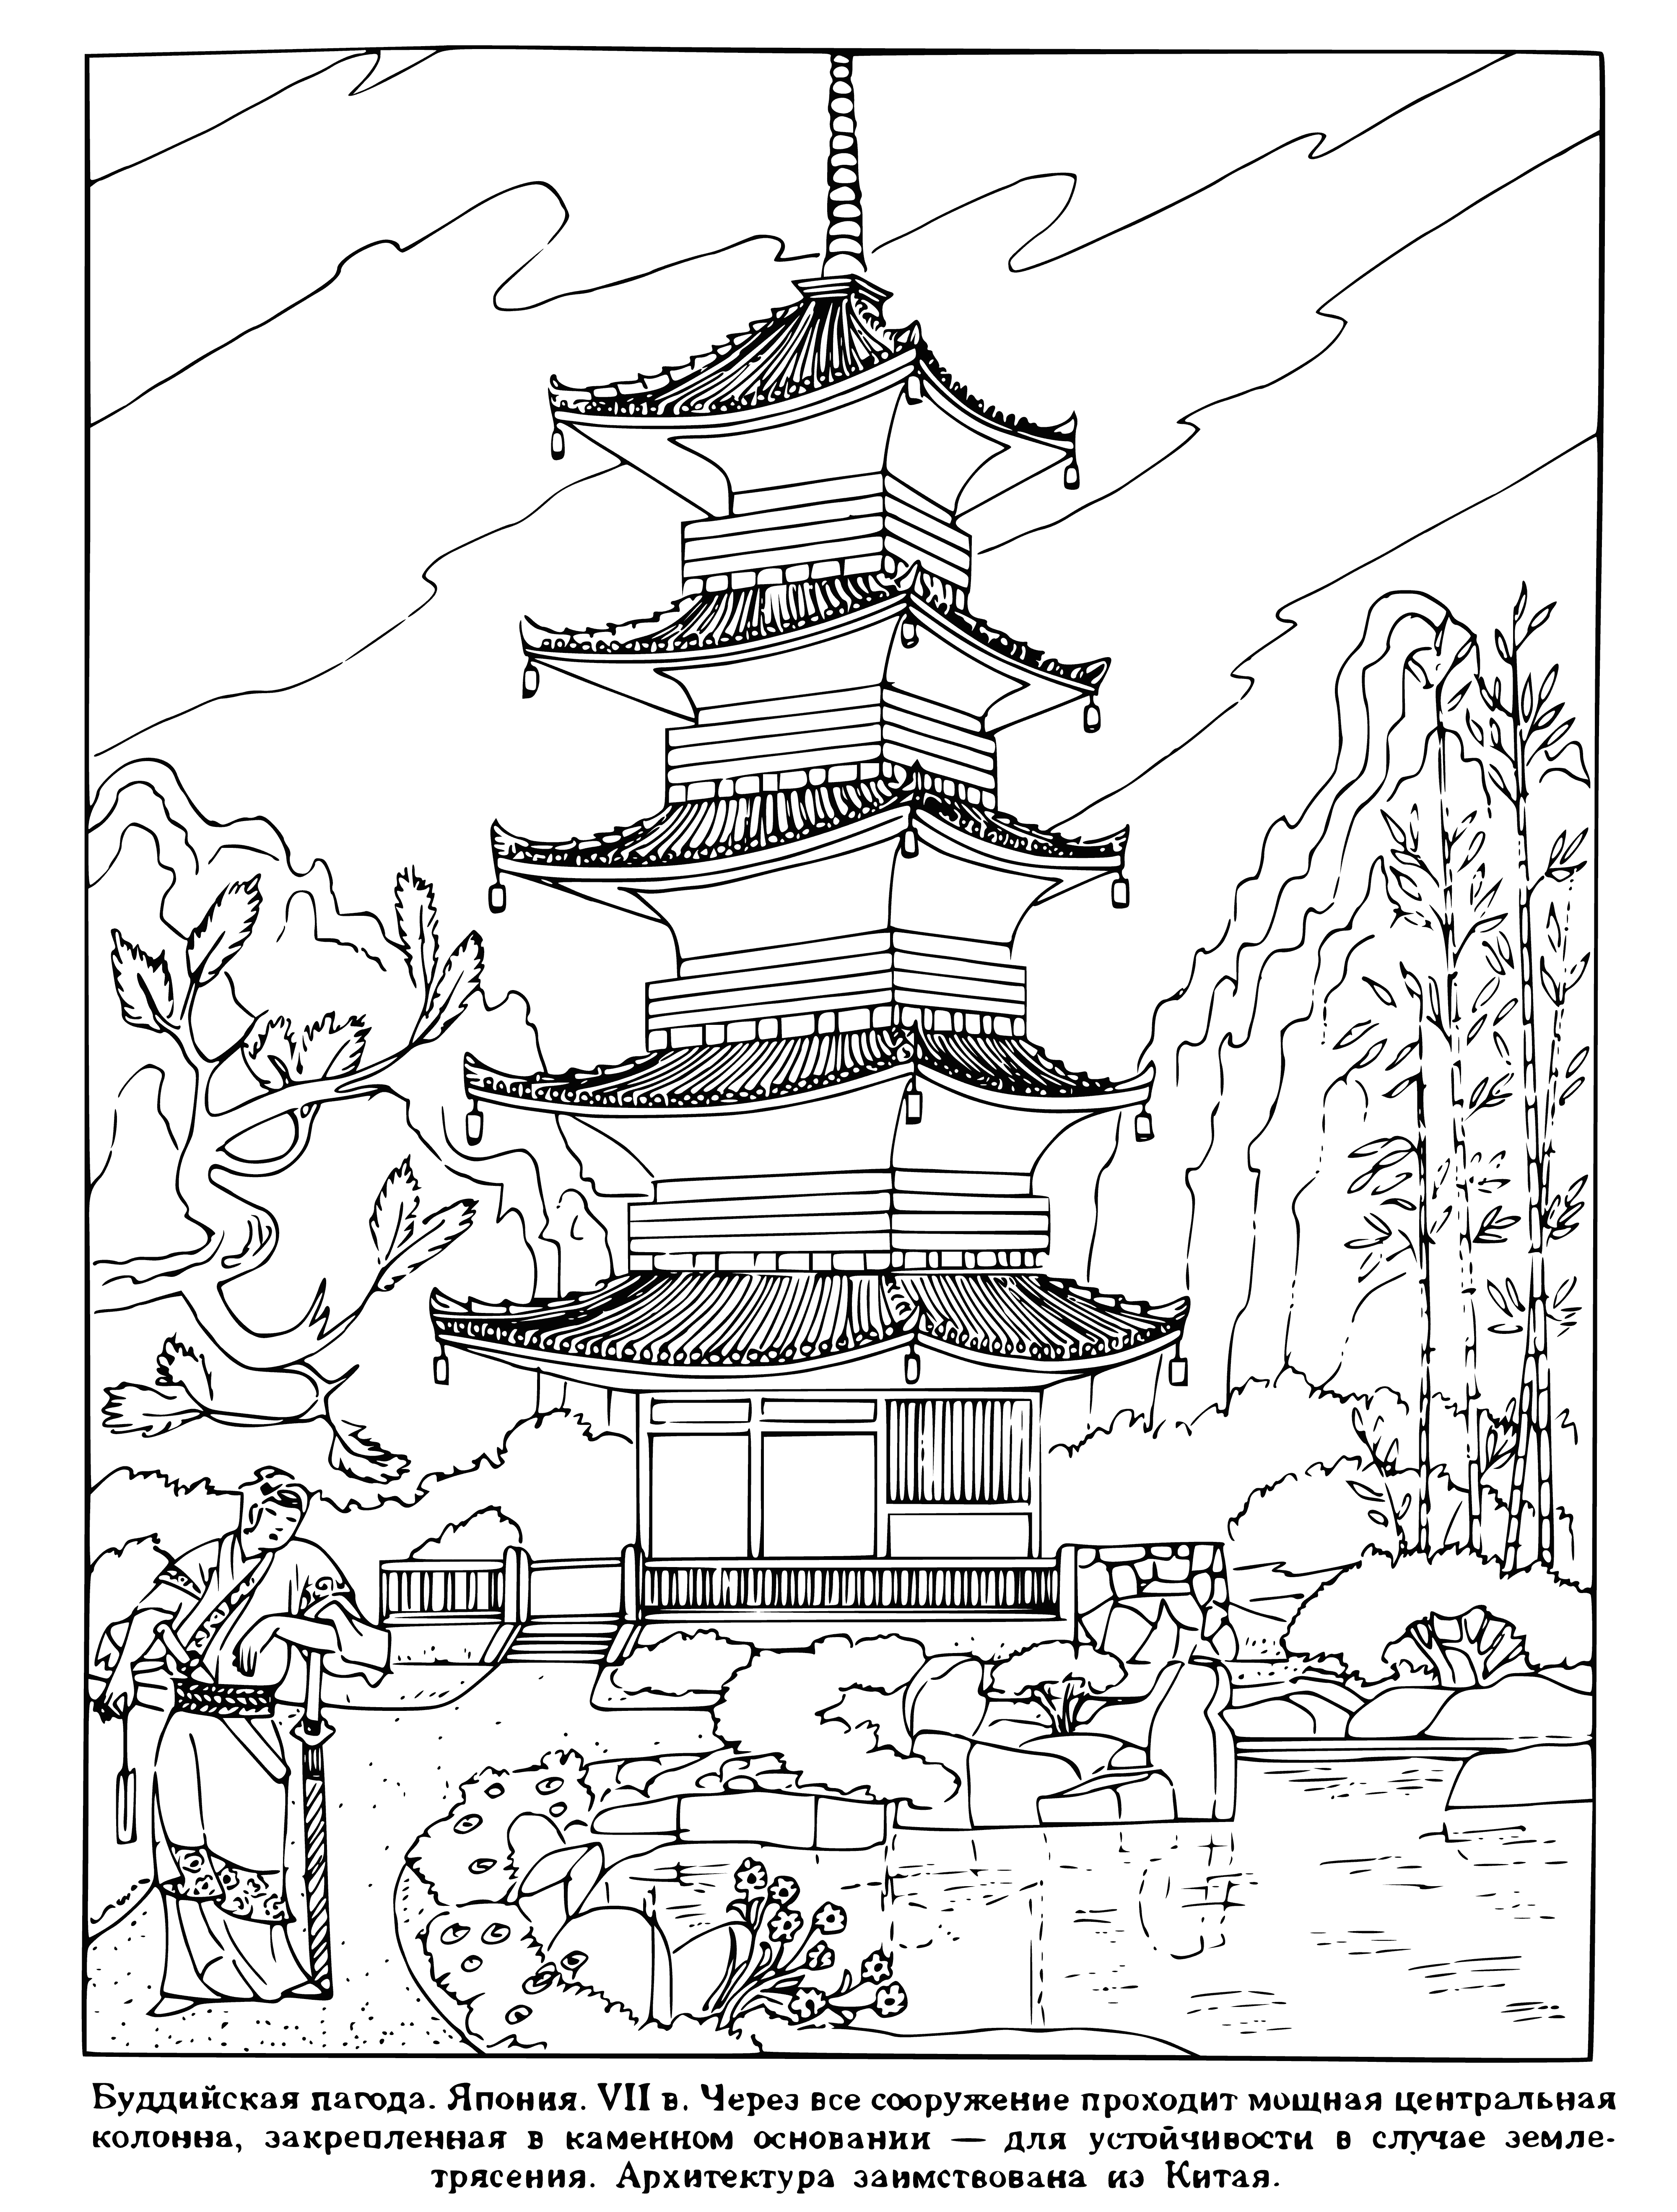 Buddhist pagoda coloring page